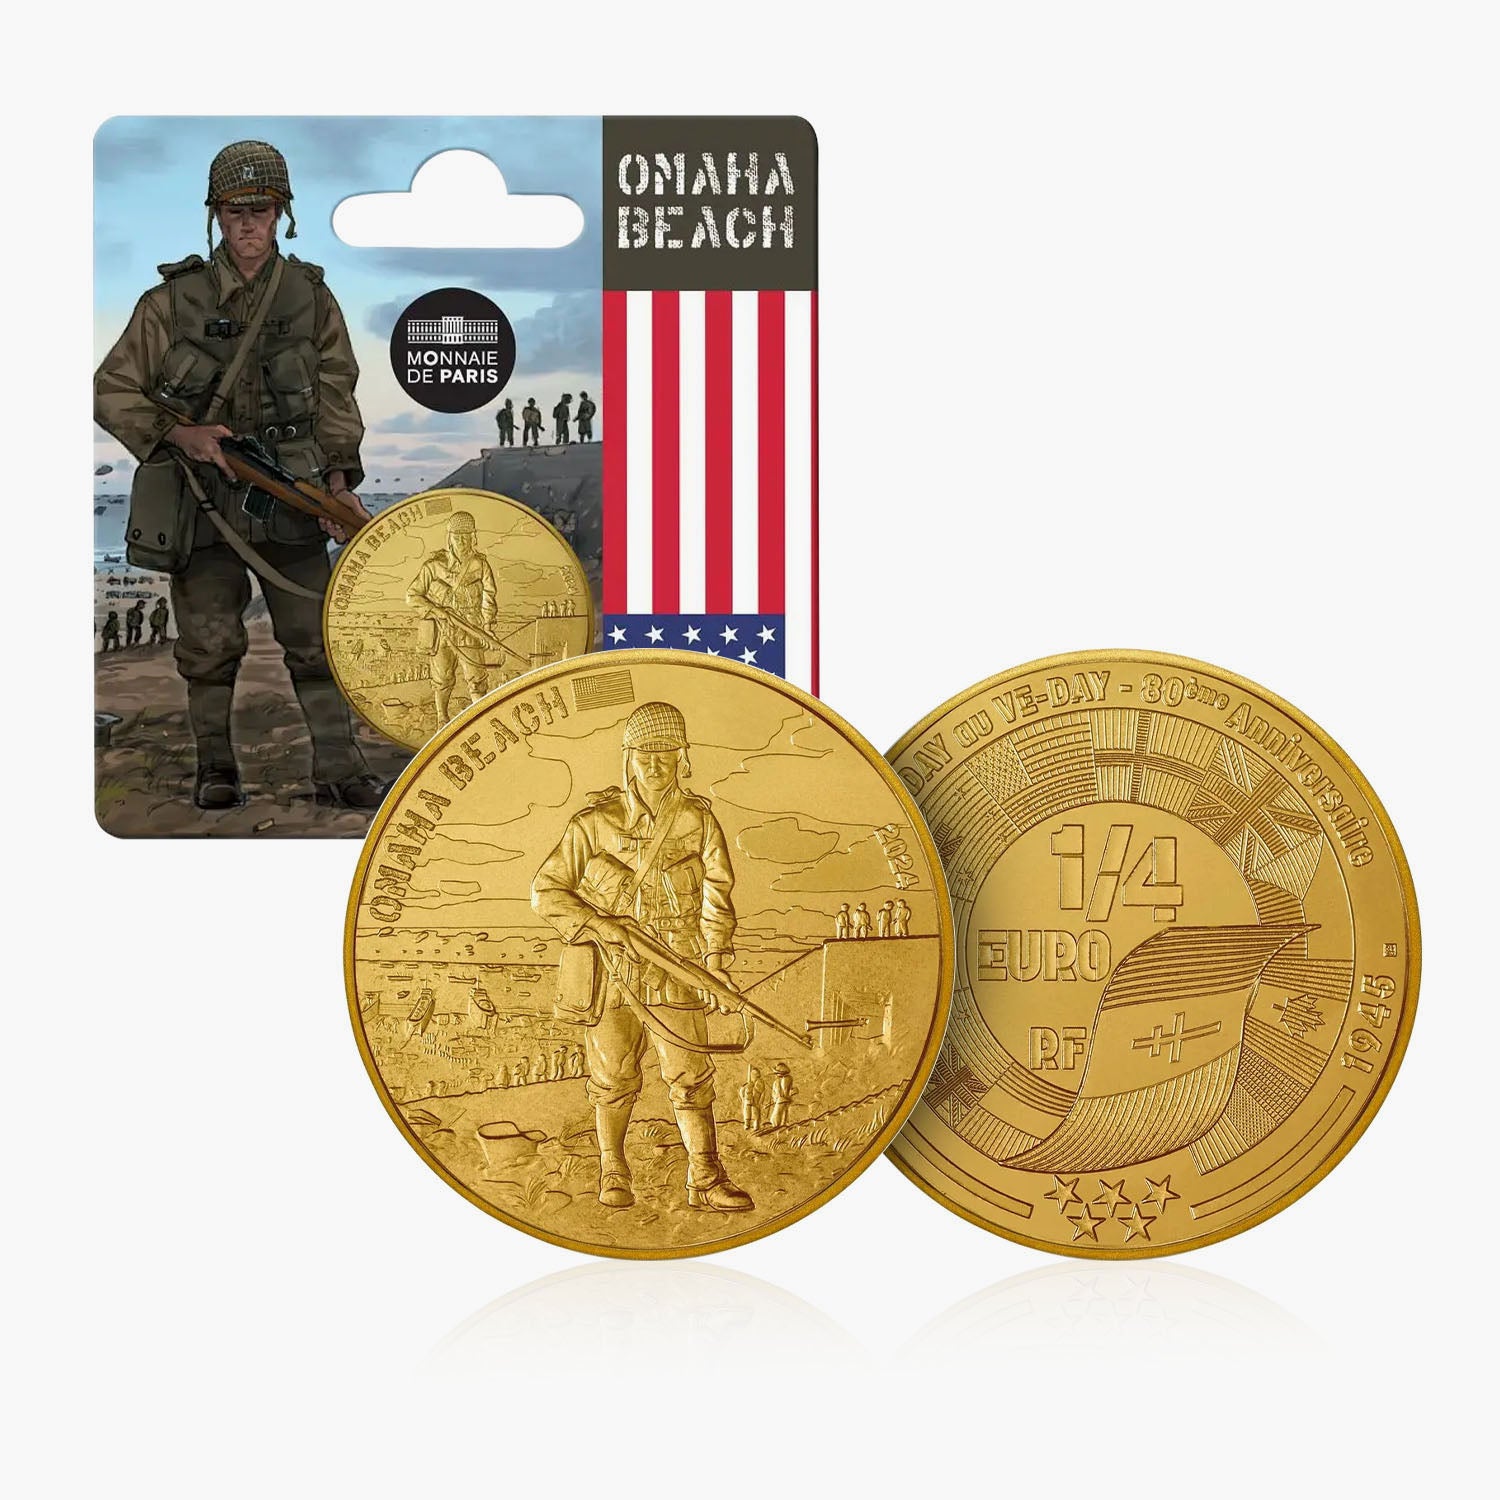 Omaha Beach - USA D-Day 80th Anniversary 1/4€ coin